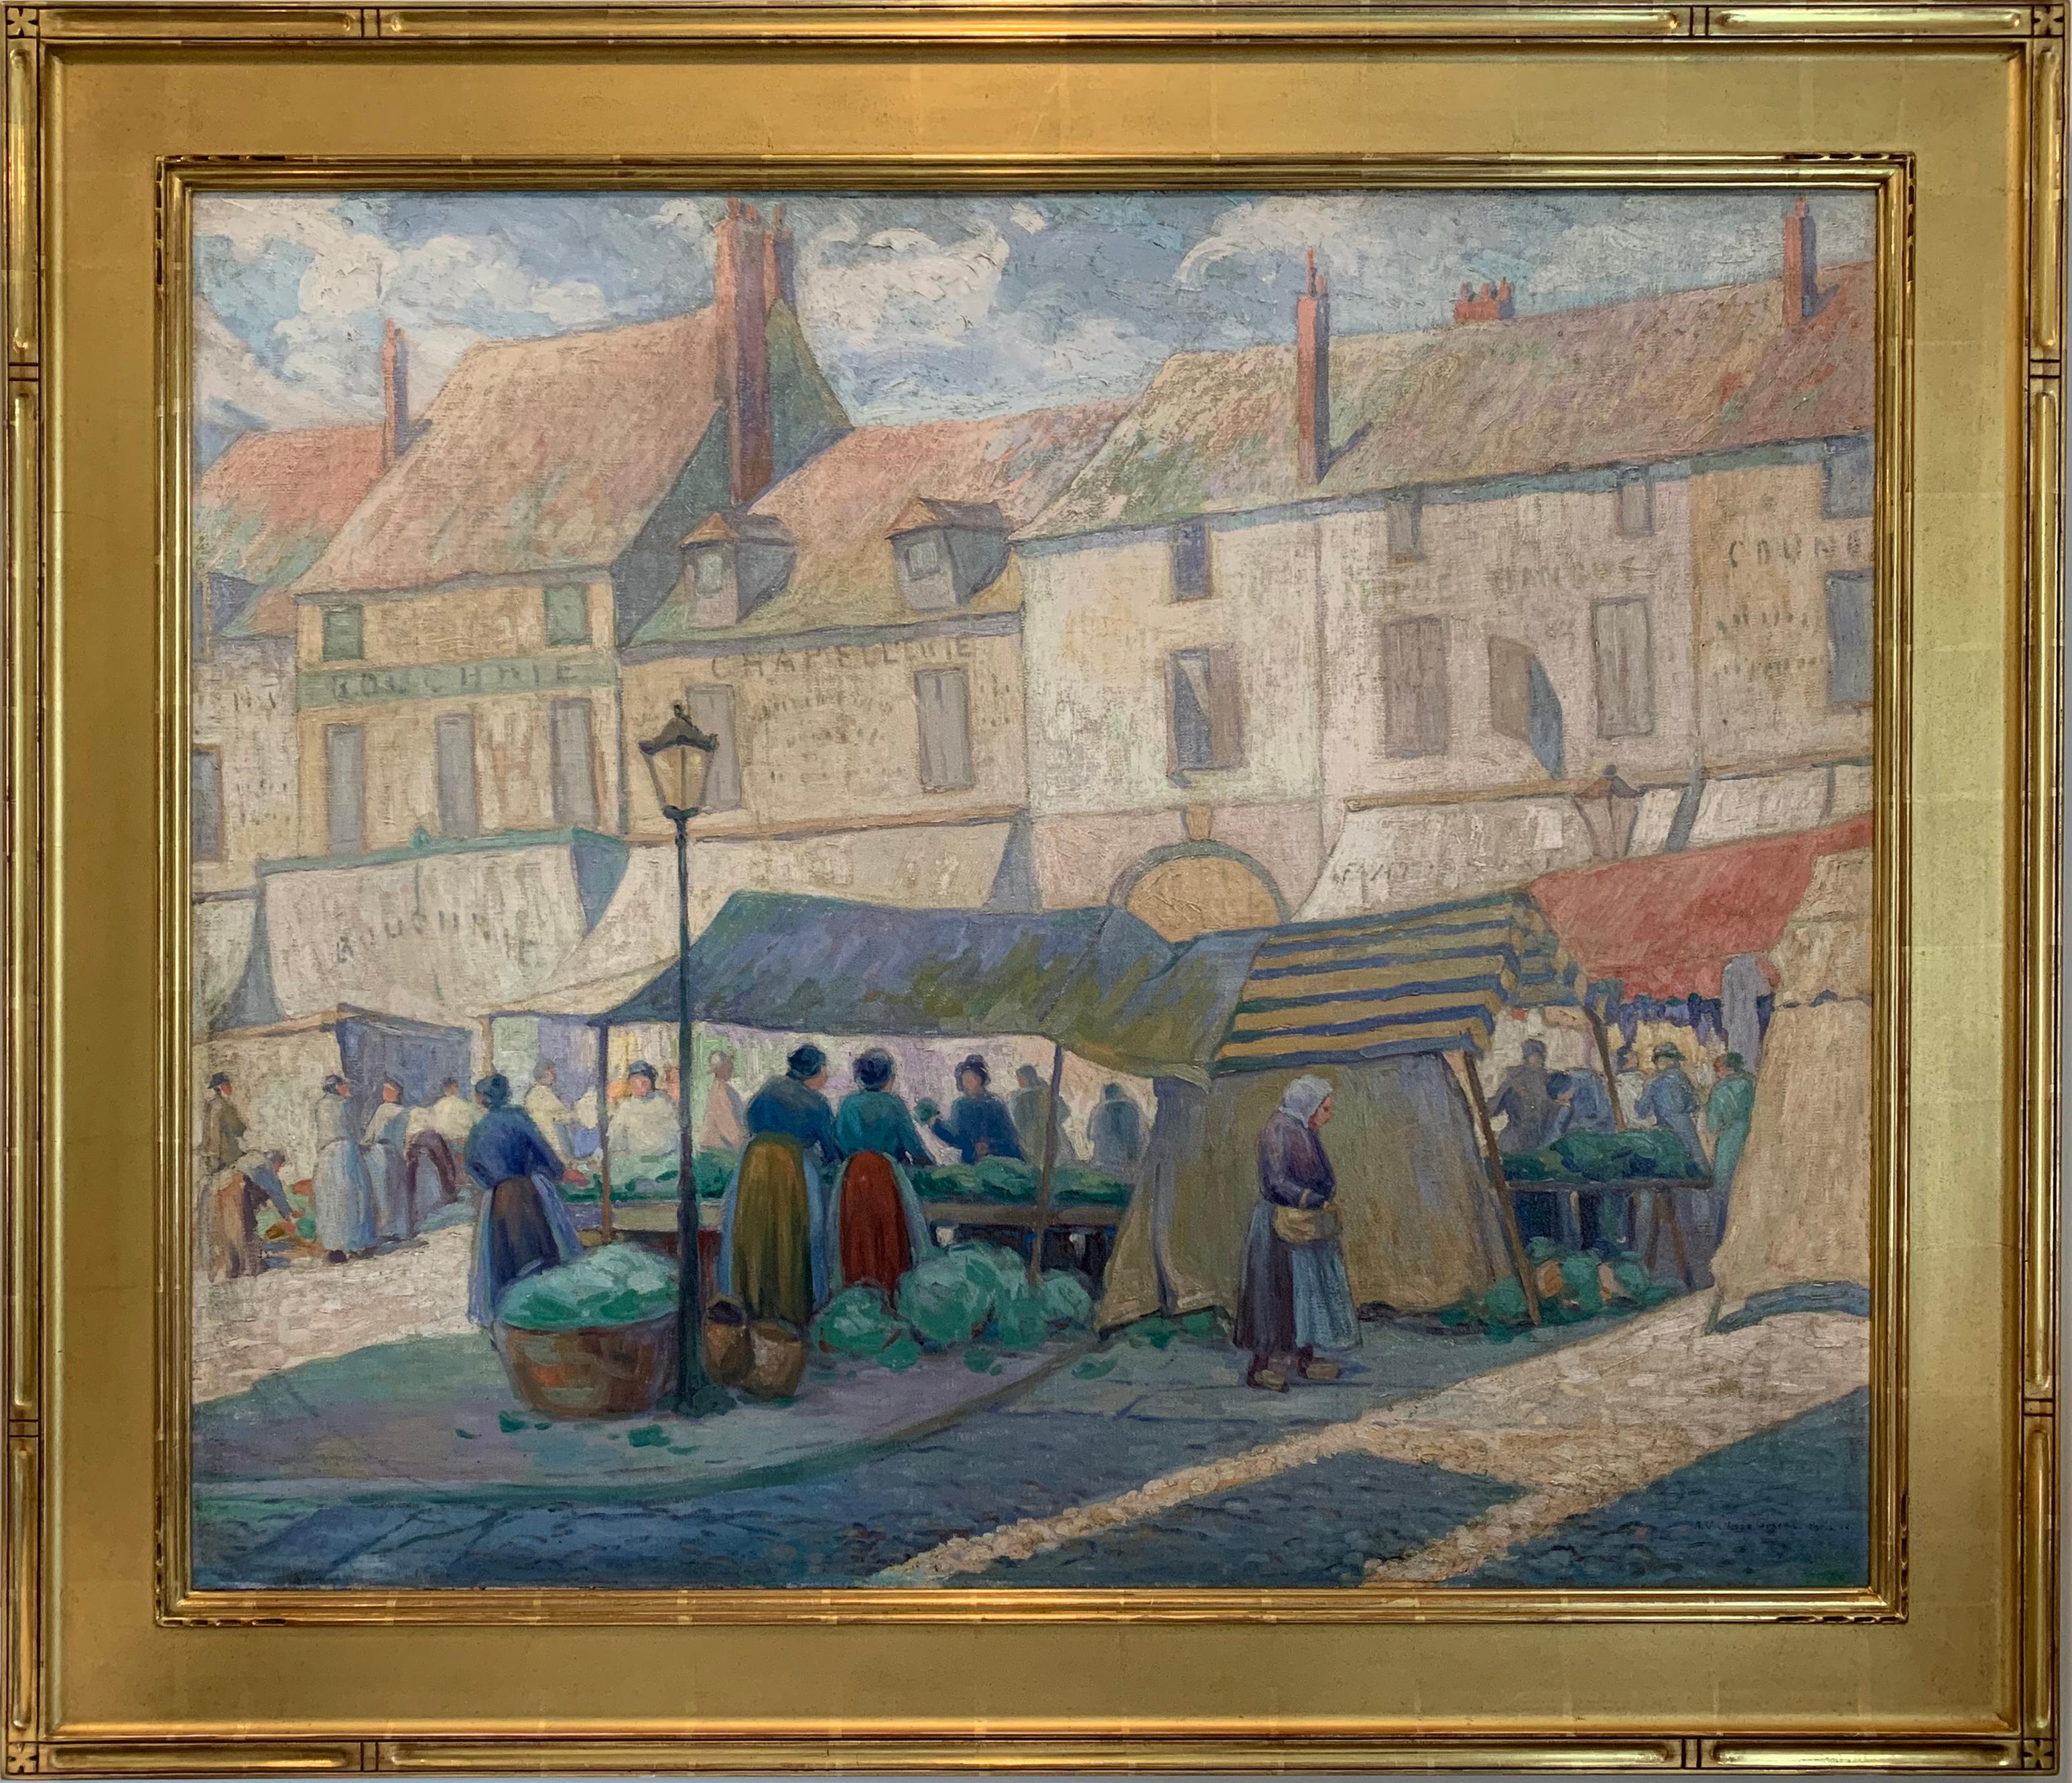 Market in Paris, European Town Scene with Figures, American Impressionist, 1922